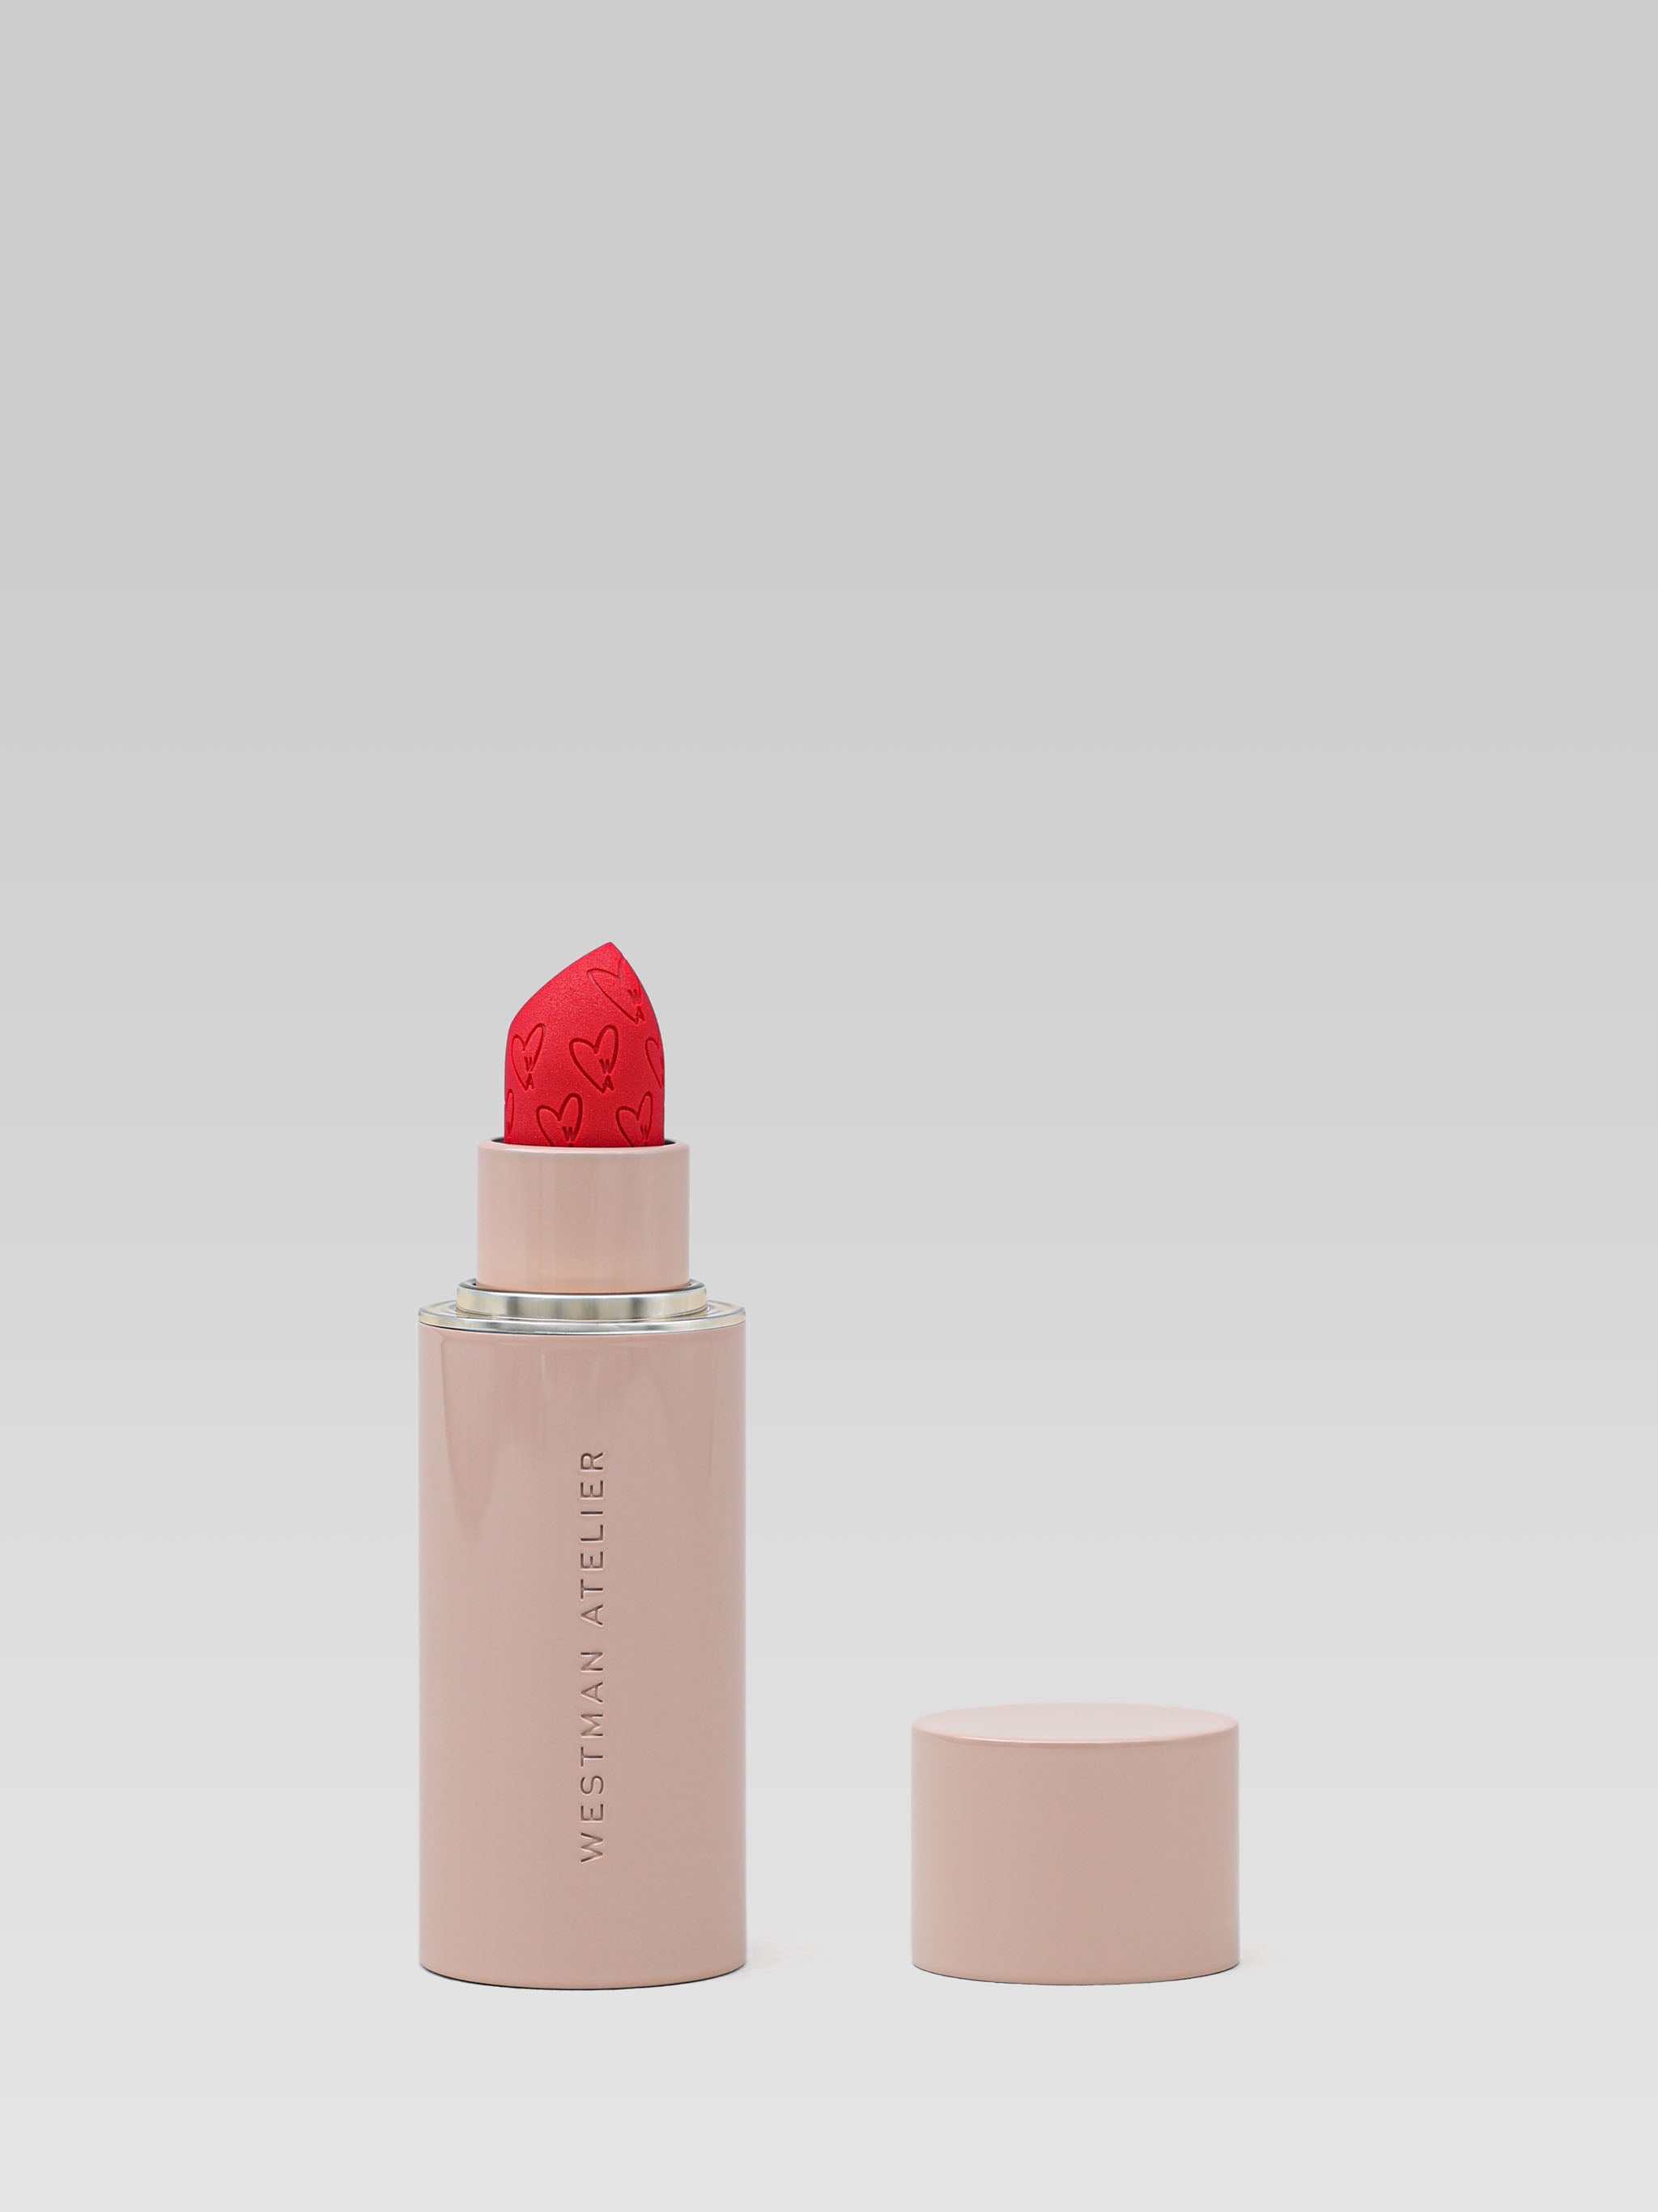 Westman Atelier Lip Suede Matte Lipstick in LFG product shot